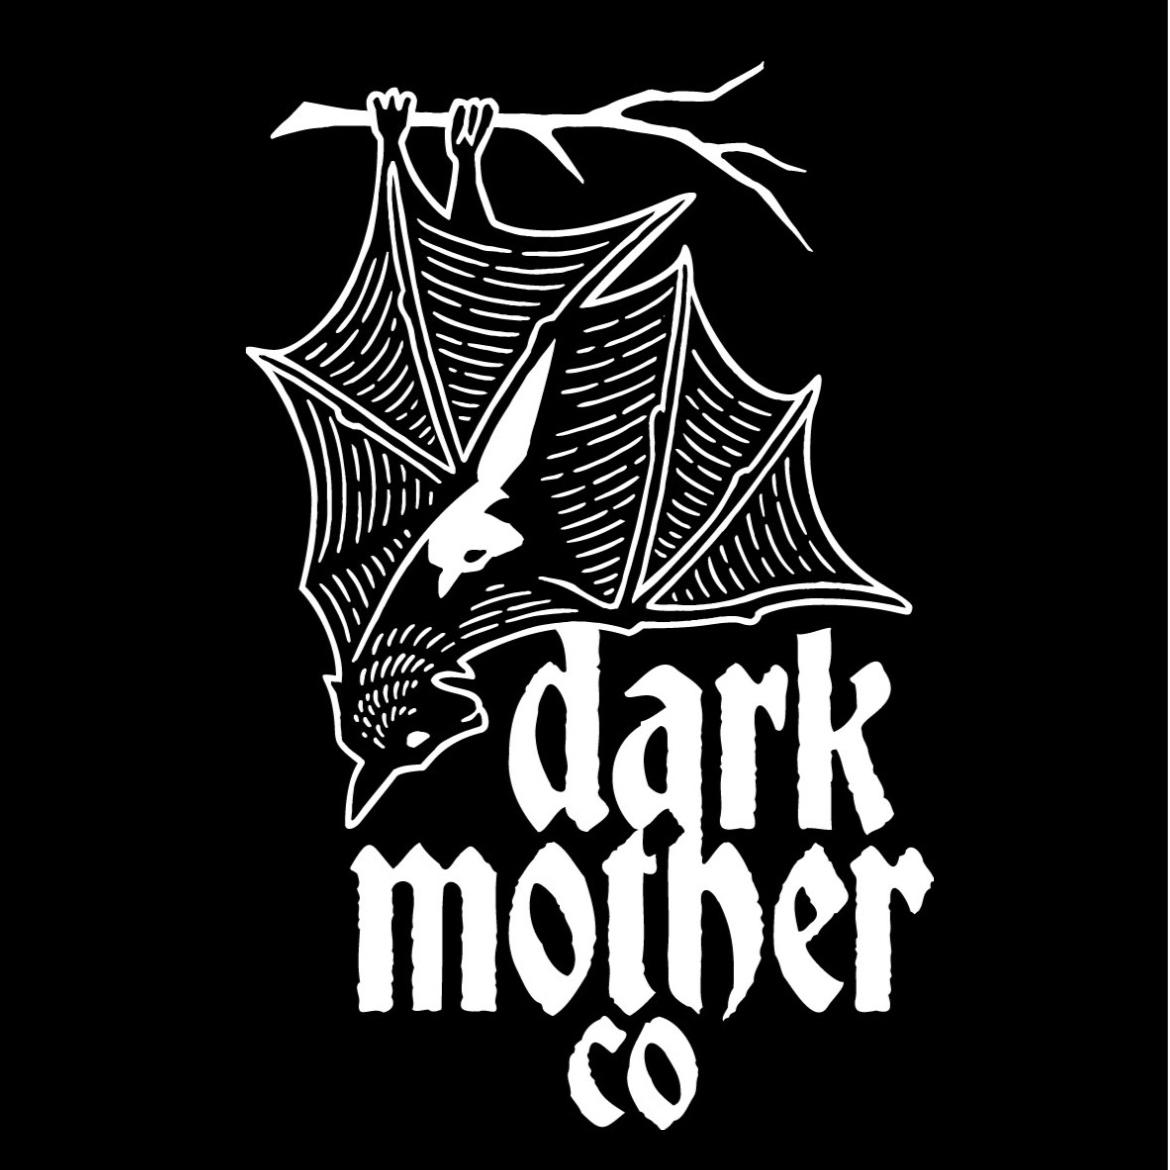 DarkMotherCo's images